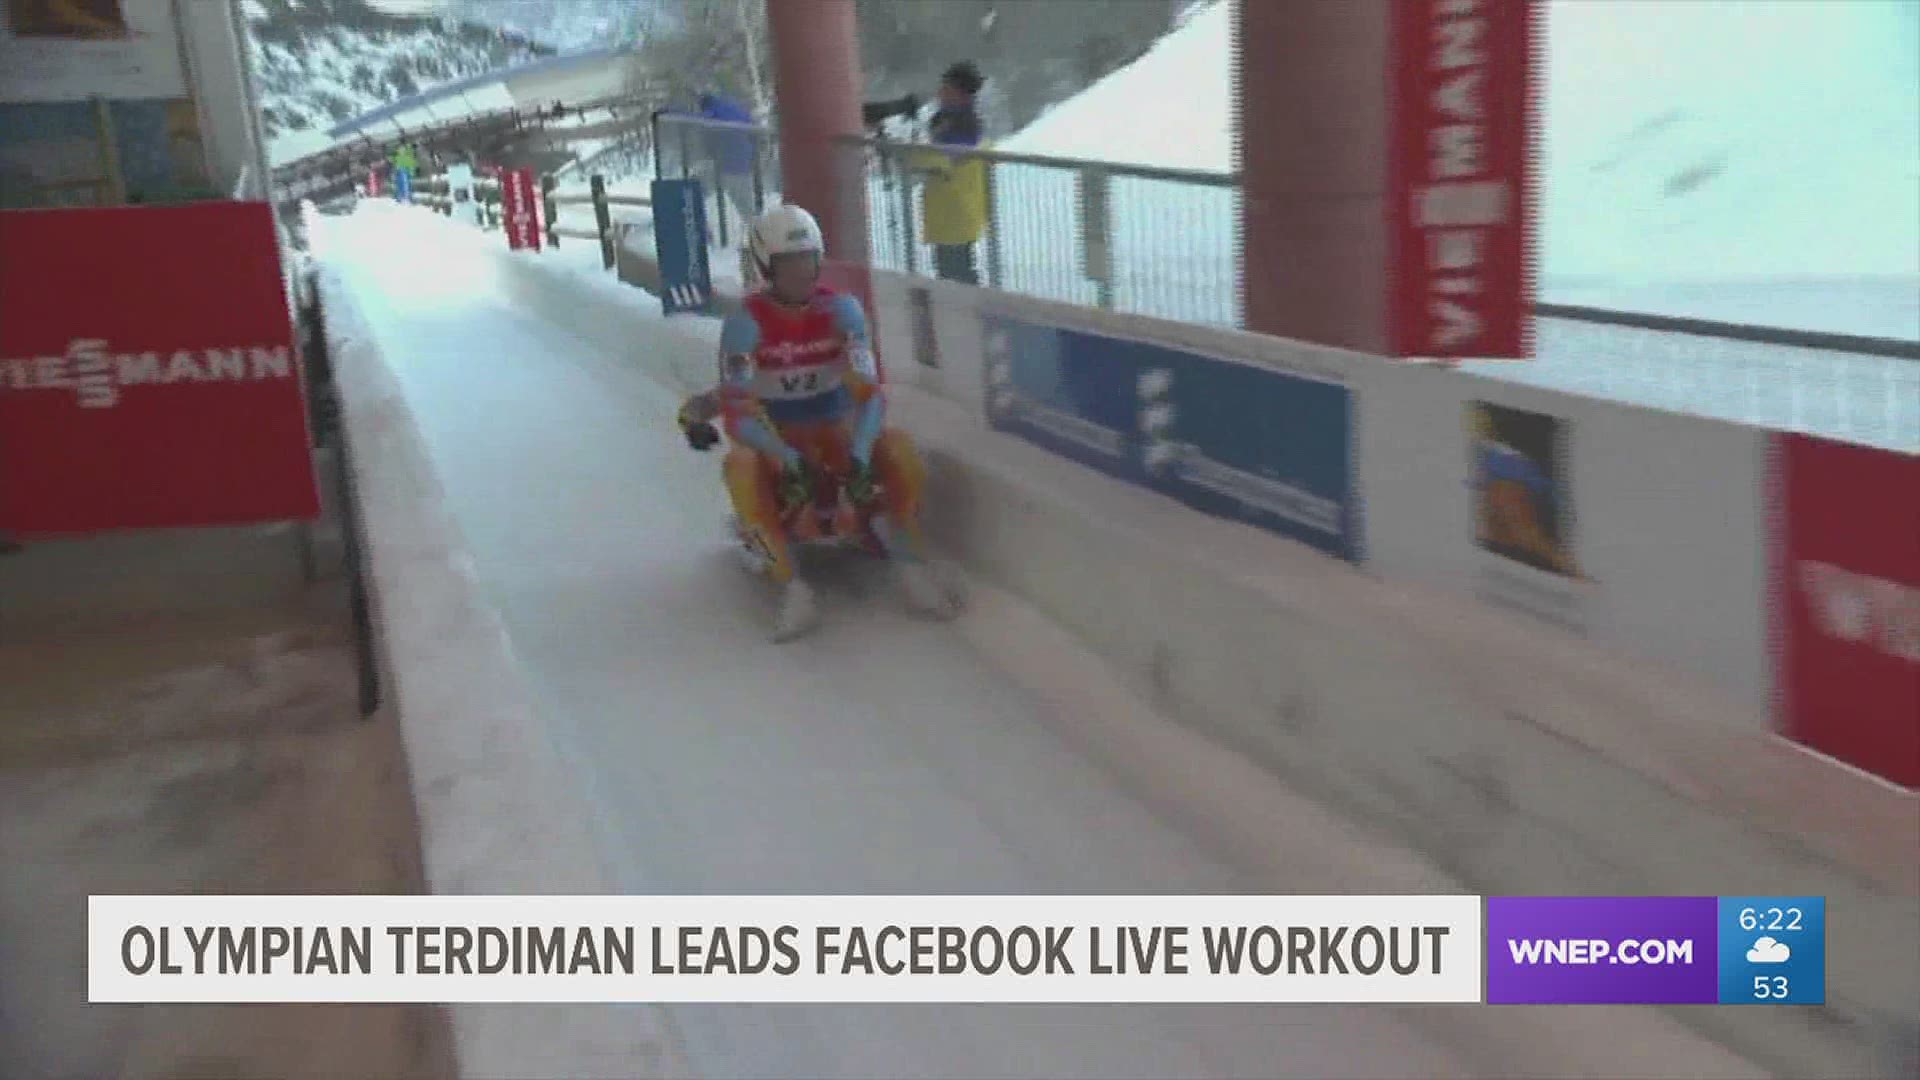 U.S. Olympian Jayson Terdiman of Berwick has workouts during quarantine.